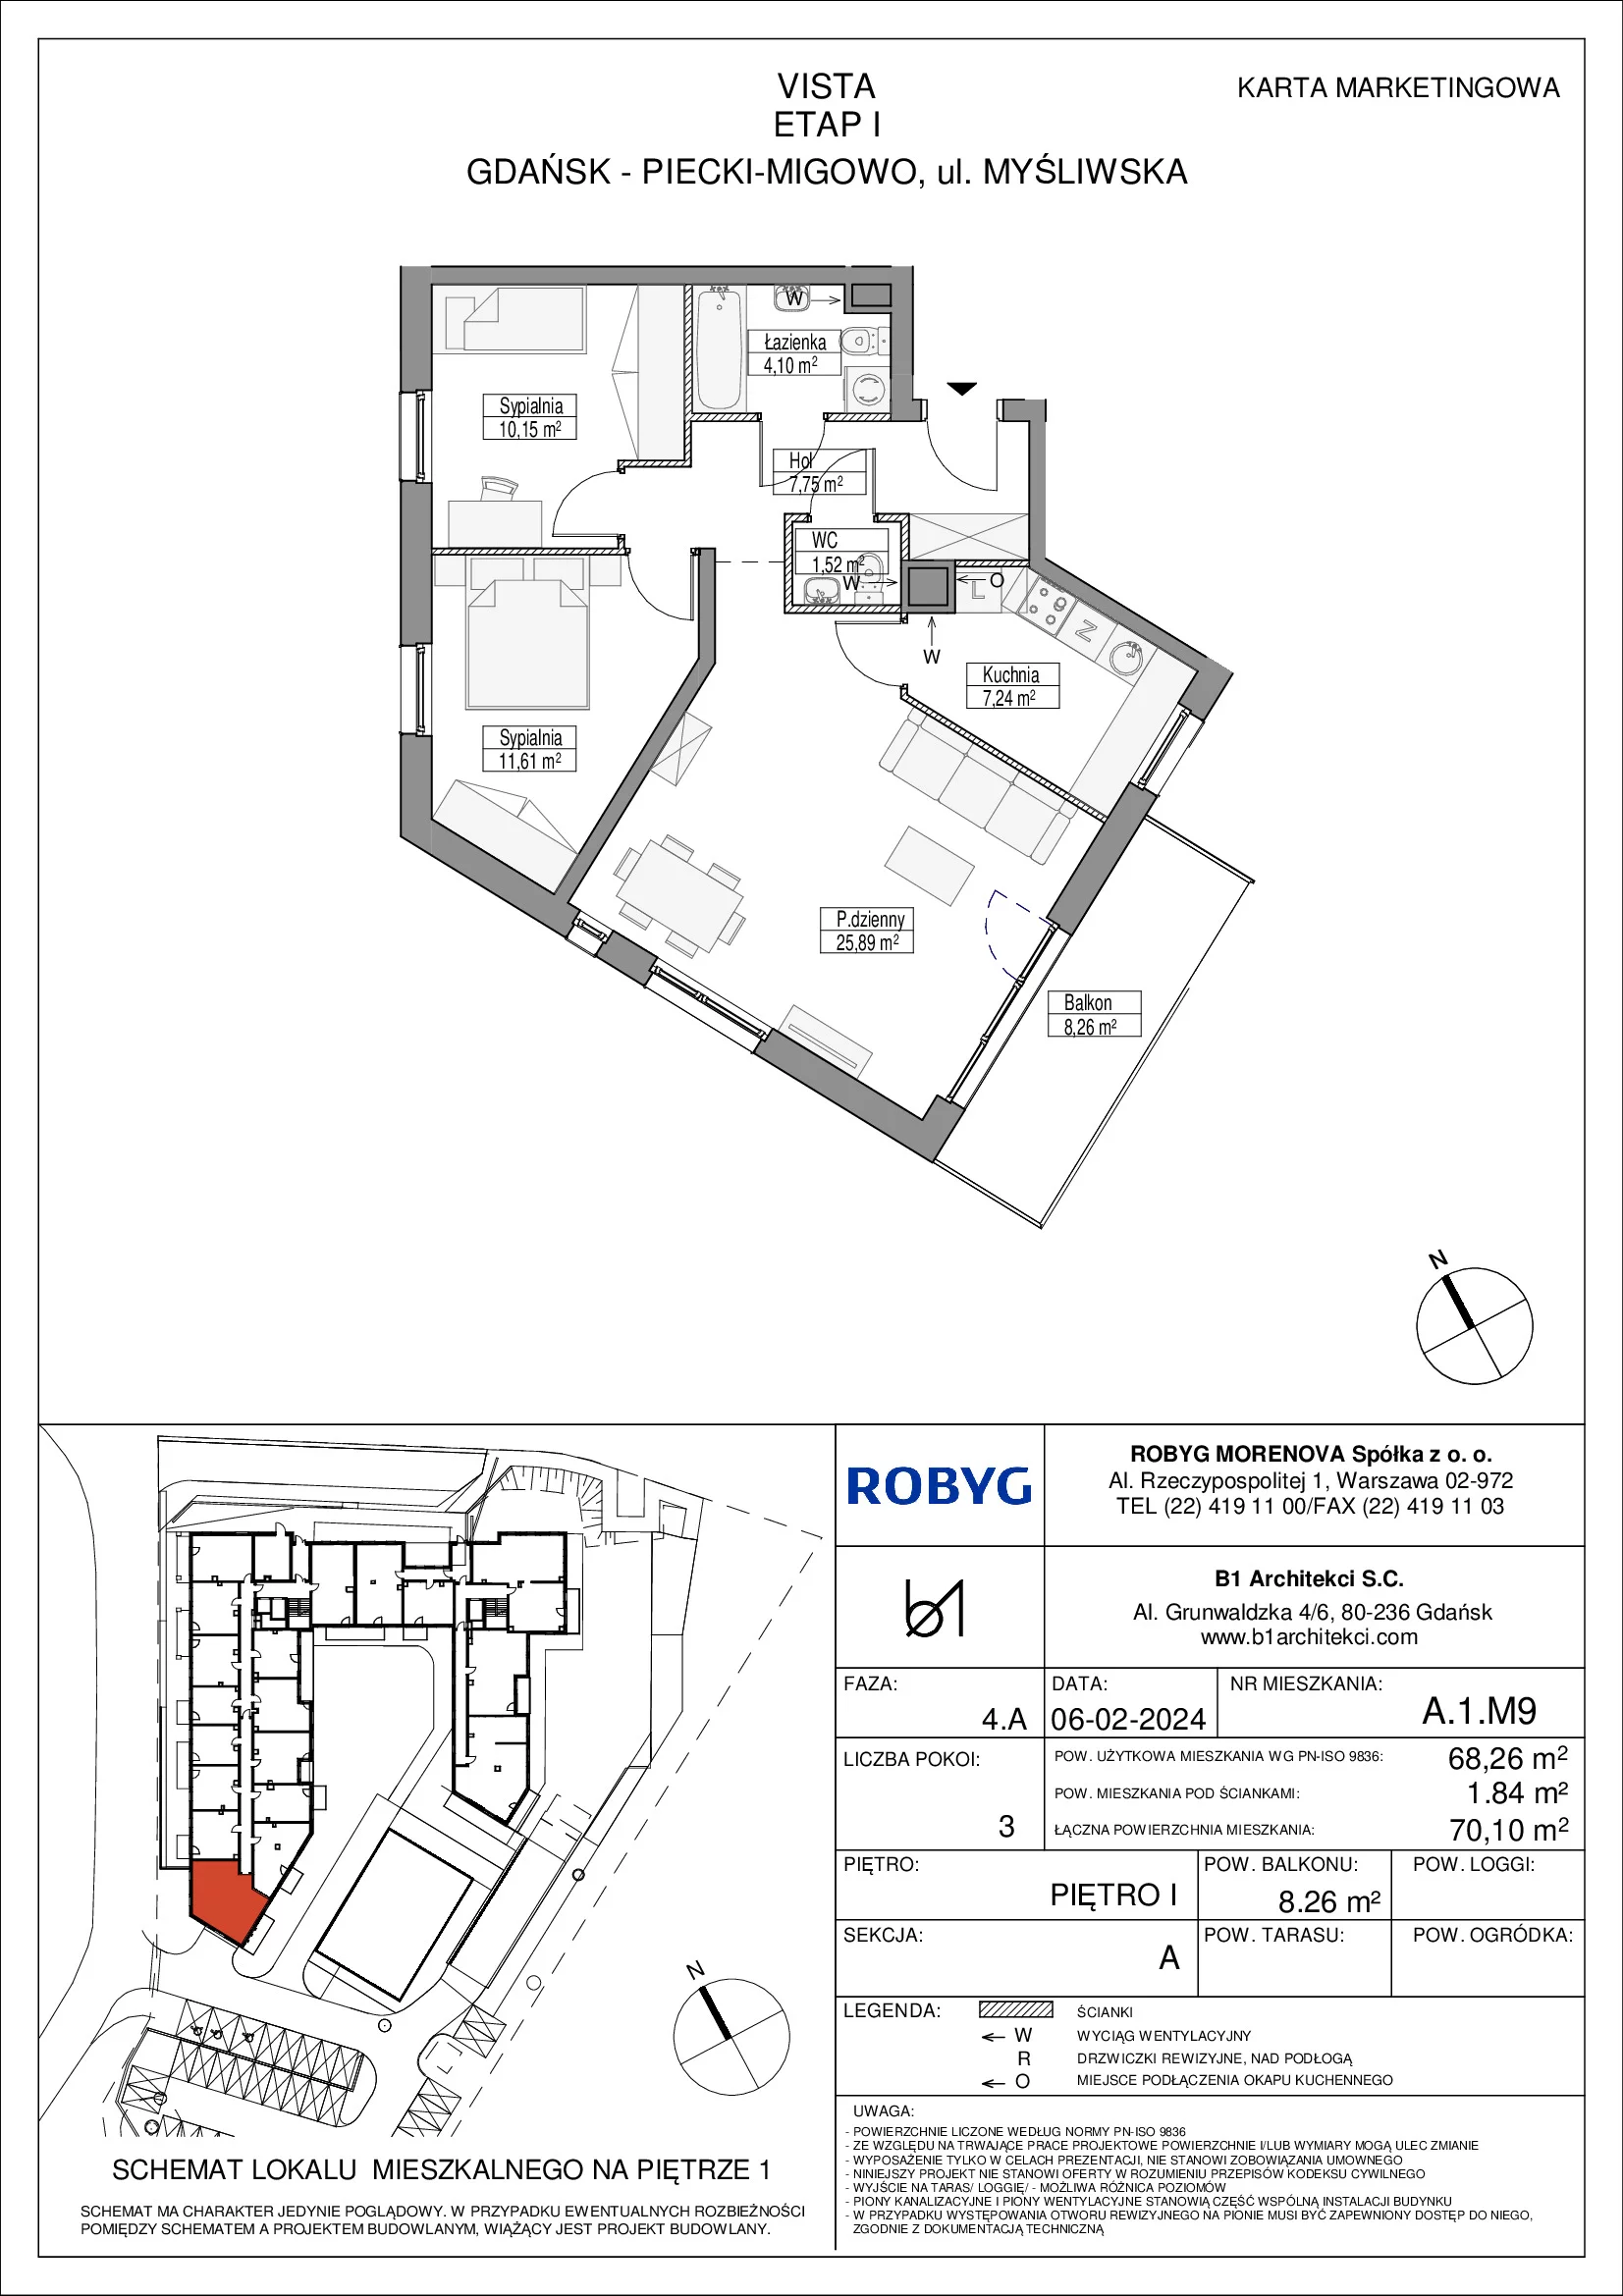 Mieszkanie 68,26 m², piętro 1, oferta nr A.1M9, VISTA, Gdańsk, Piecki-Migowo, ul. Myśliwska 30